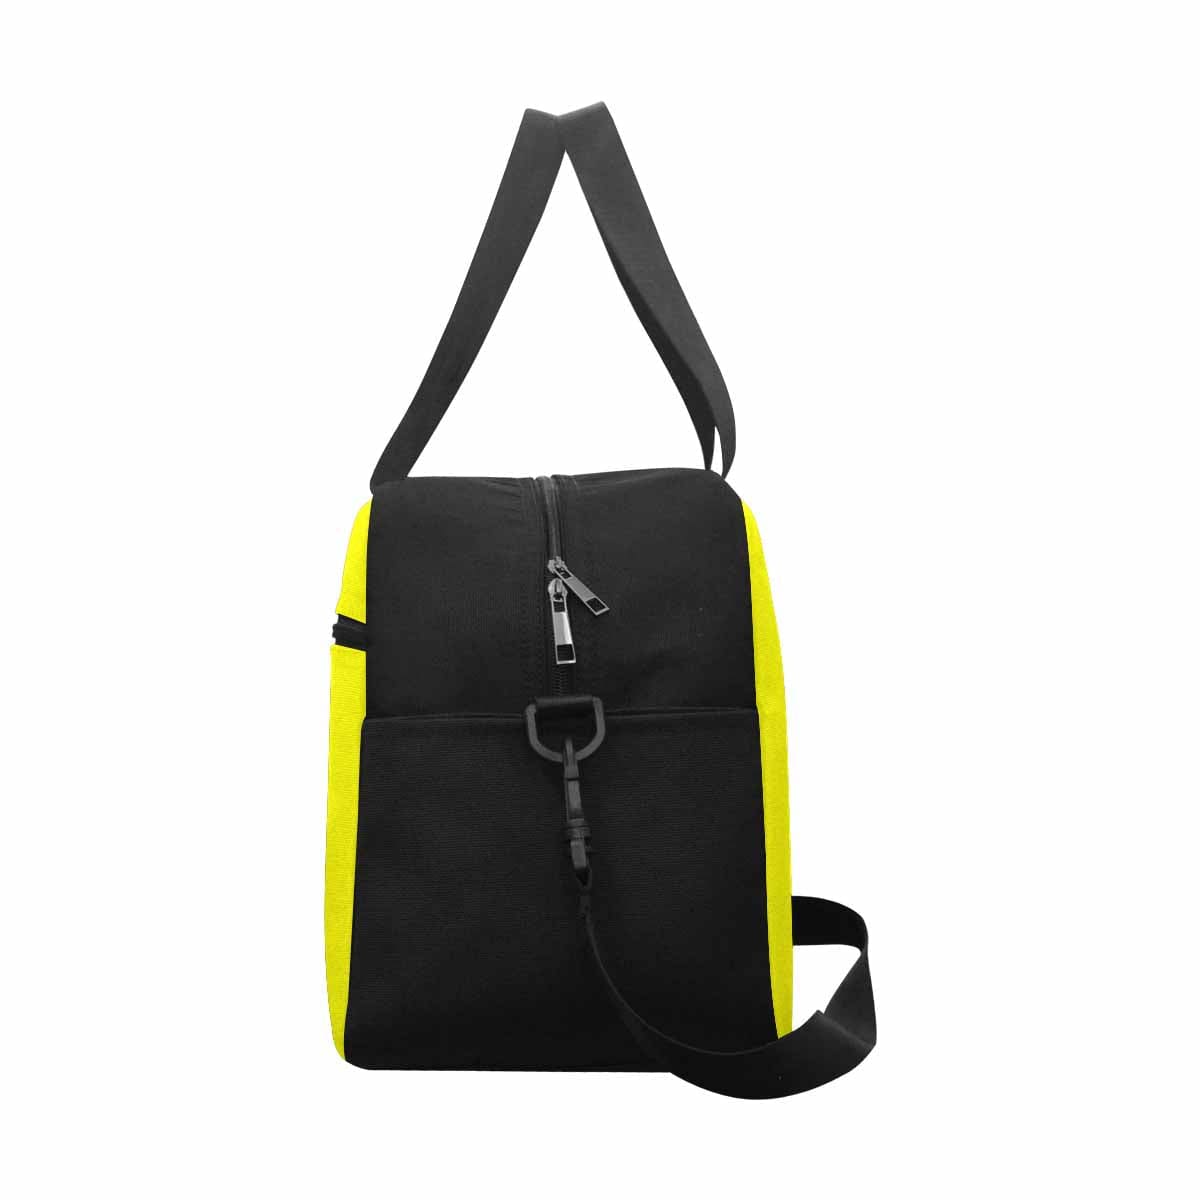 Yellow Tote And Crossbody Travel Bag - Bags | Travel Bags | Crossbody